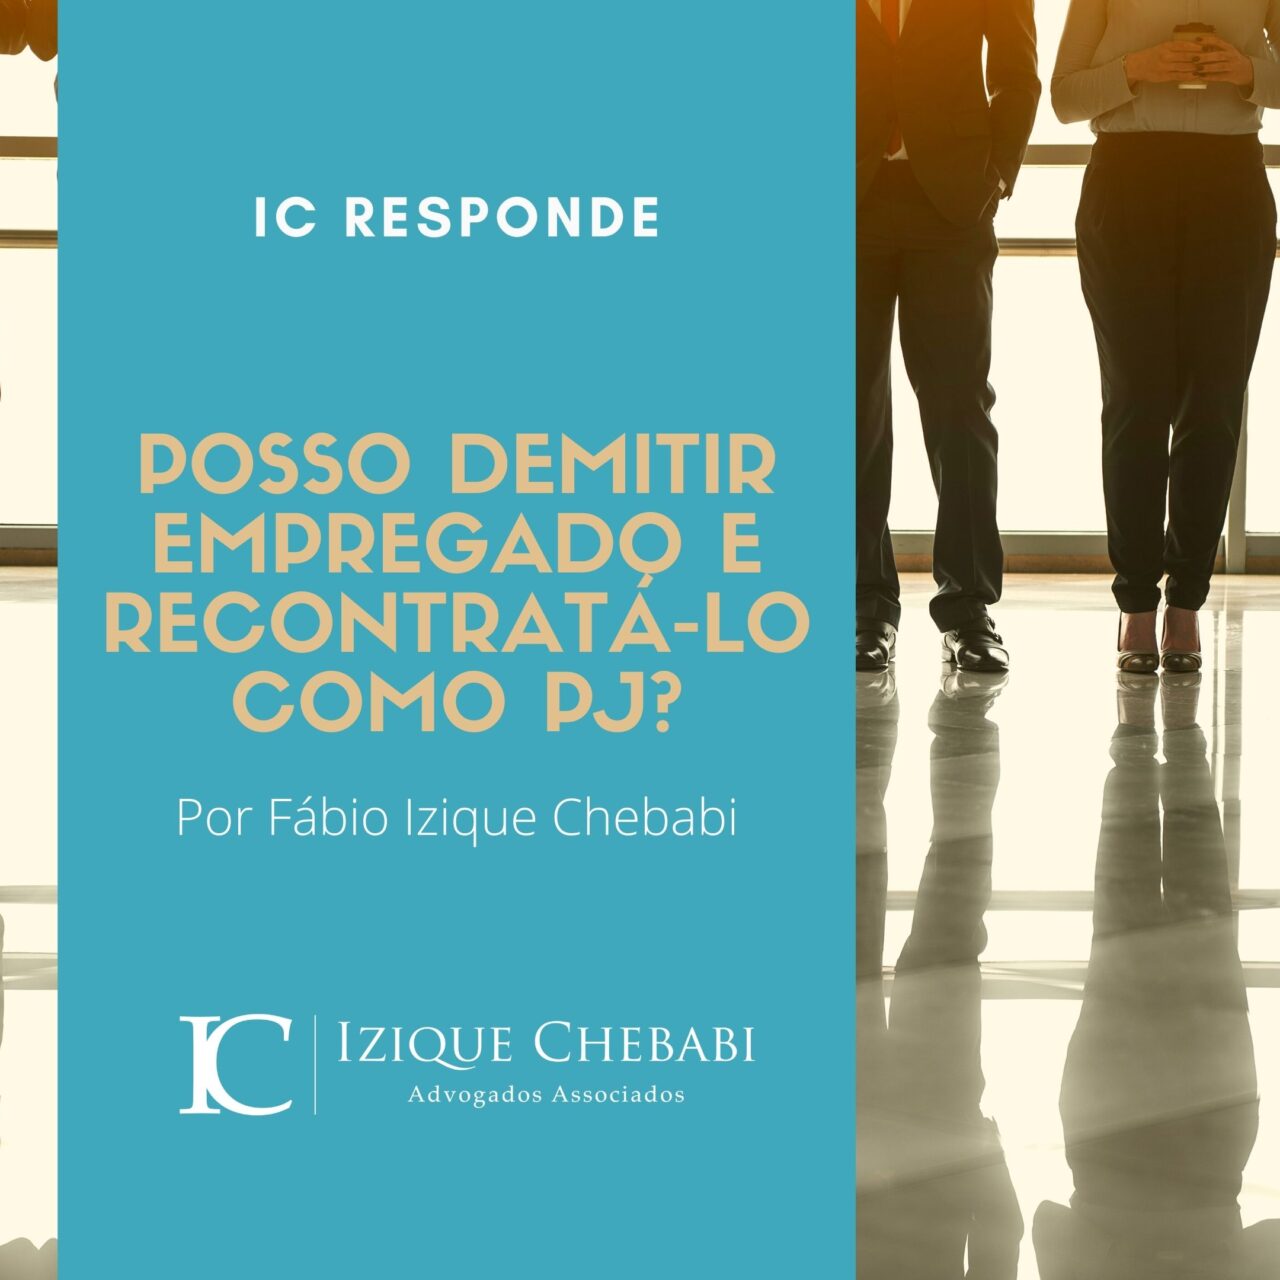 https://chebabi.com/wp-content/uploads/2021/07/IC-responde-Fabio-correto-1280x1280.jpg